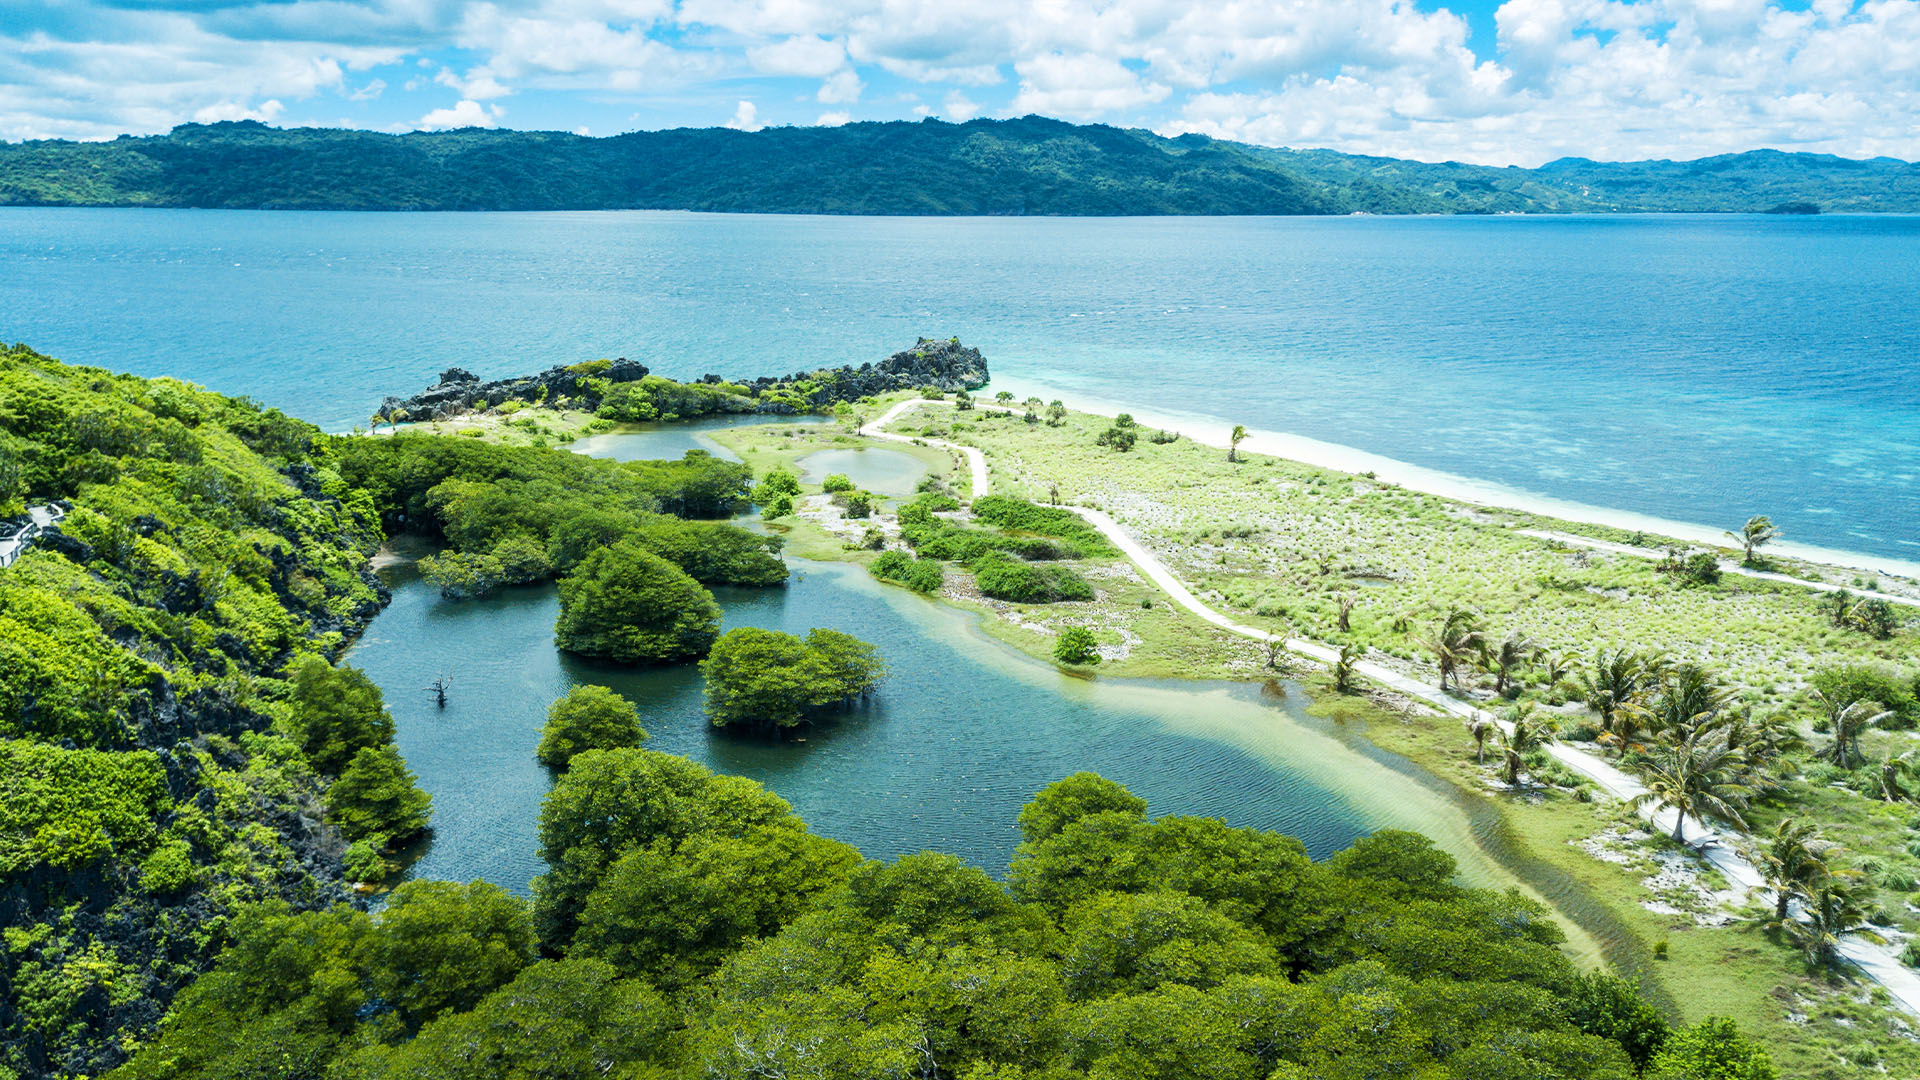 8 Things To Do In Bulalacao - Alibatan Island aka Target Island